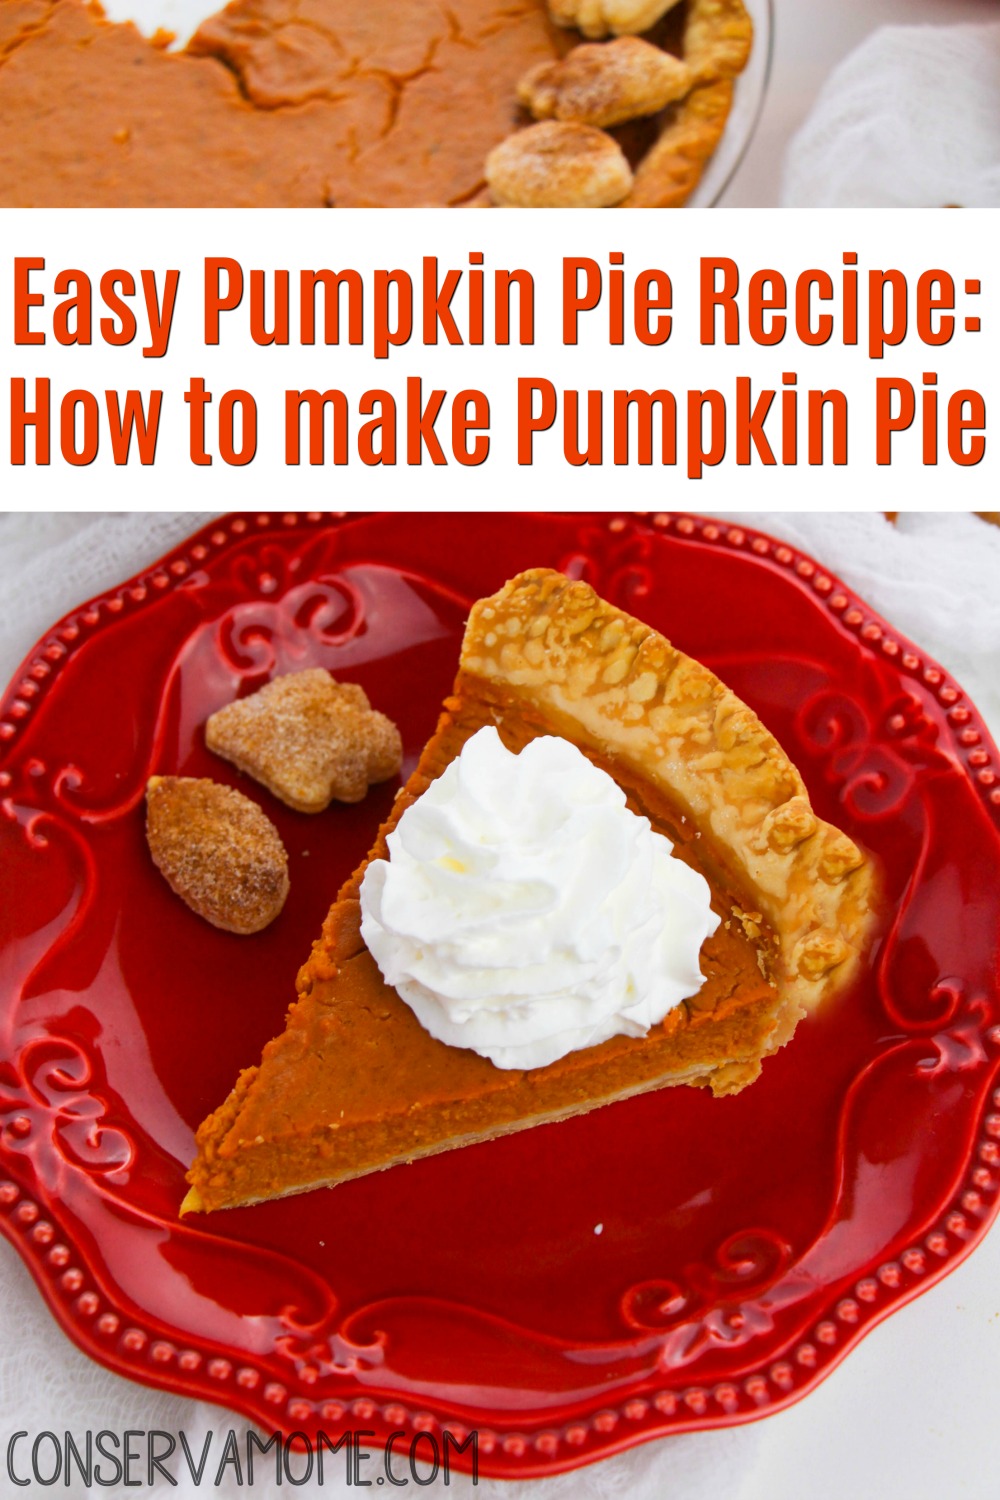 Easy Pumpkin Pie Recipe: How to make Pumpkin Pie